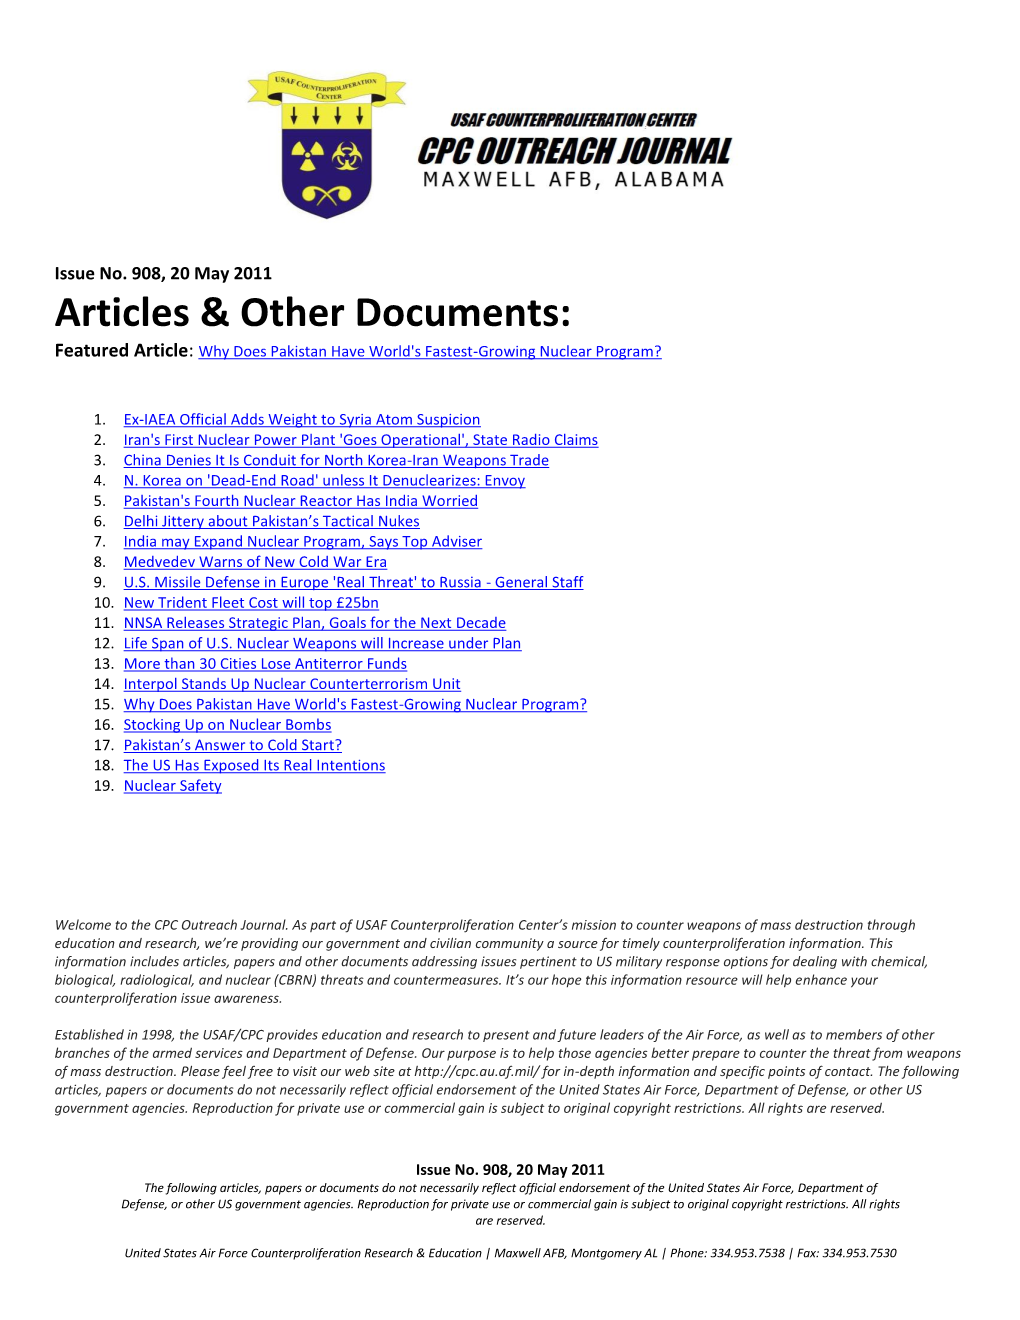 USAF Counterproliferation Center CPC Outreach Journal #908